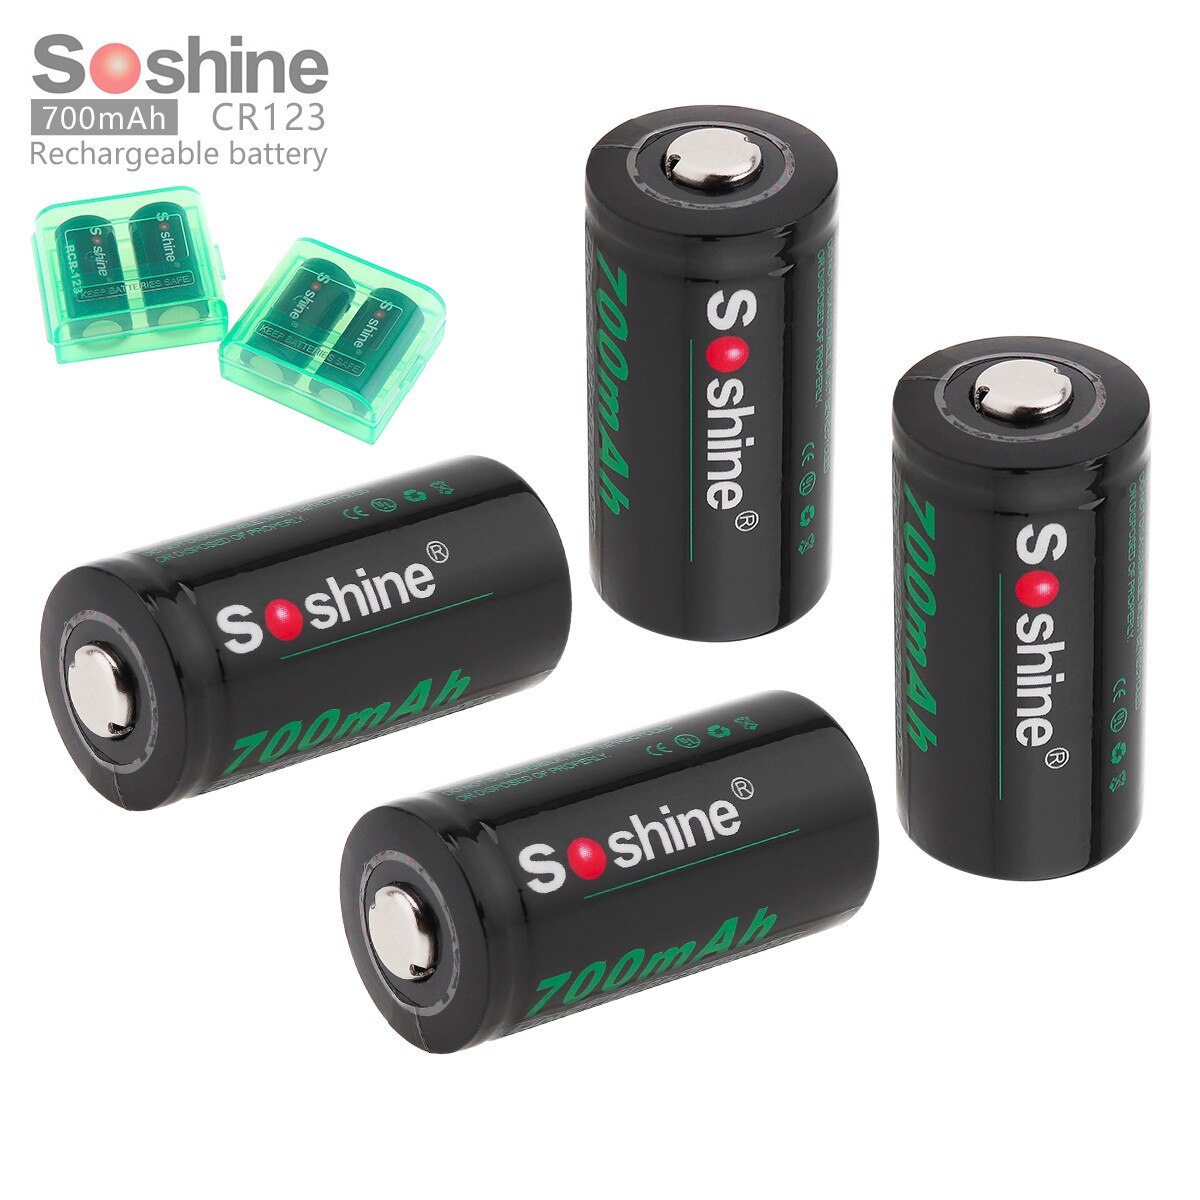 4 Stks/partij Soshine RCR123 16340 700 Mah Li-Ion Oplaadbare Batterij Met 2 X Batterij Storage Box Case Voor Zaklamp Koplamp